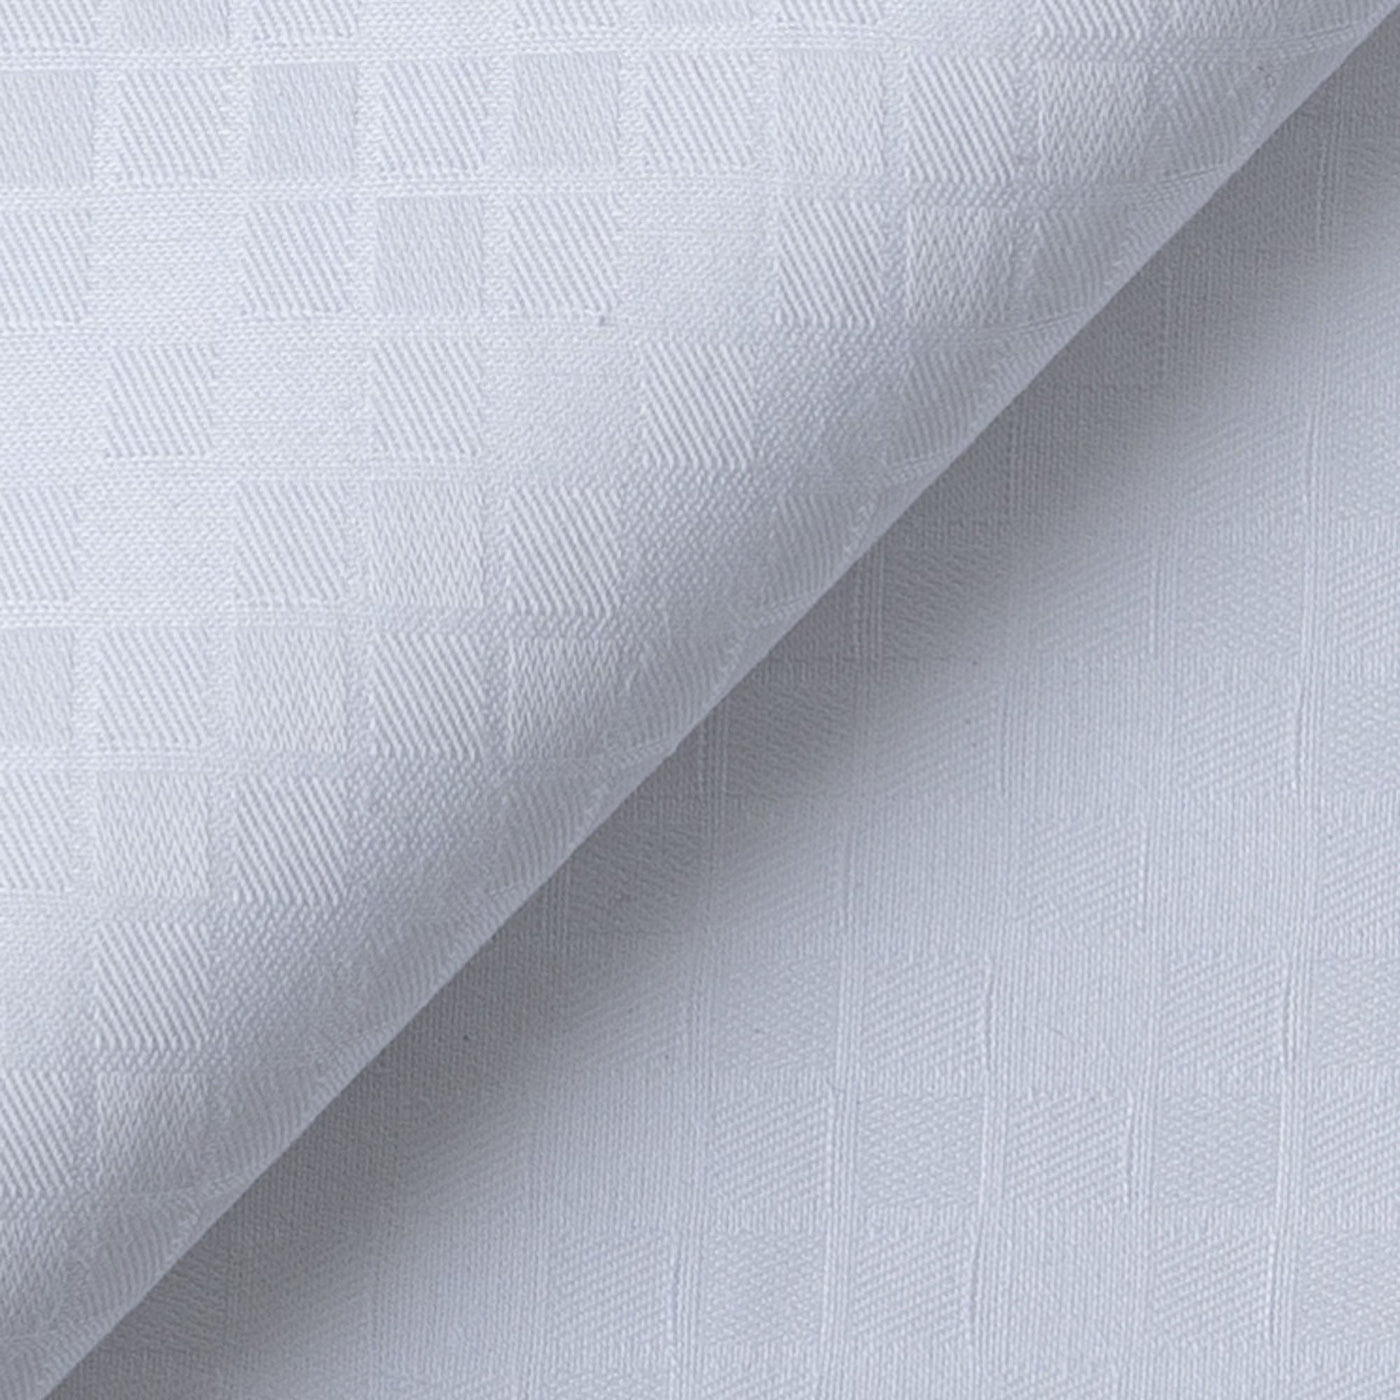 Fabric Pandit Cut Piece 1.00M (CUT PIECE) White Box Pattern Cotton Satin Dobby Luxury Men's Shirt Fabric (Width 58 inch)